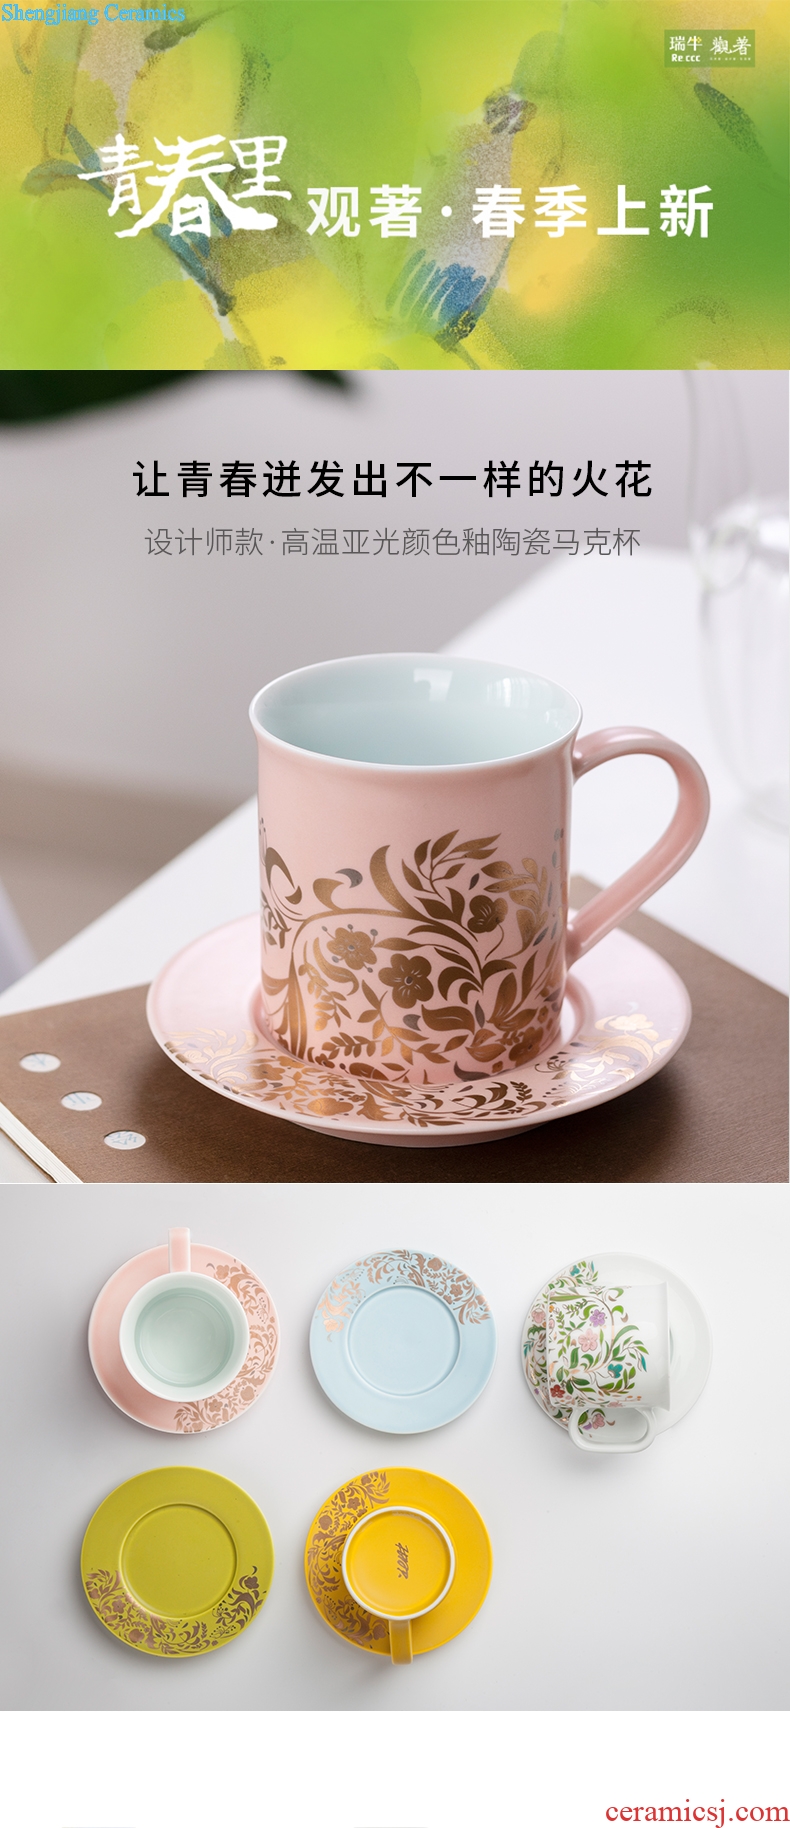 Designer duds & middot; High temperature inferior smooth color glaze ceramic coffee cup